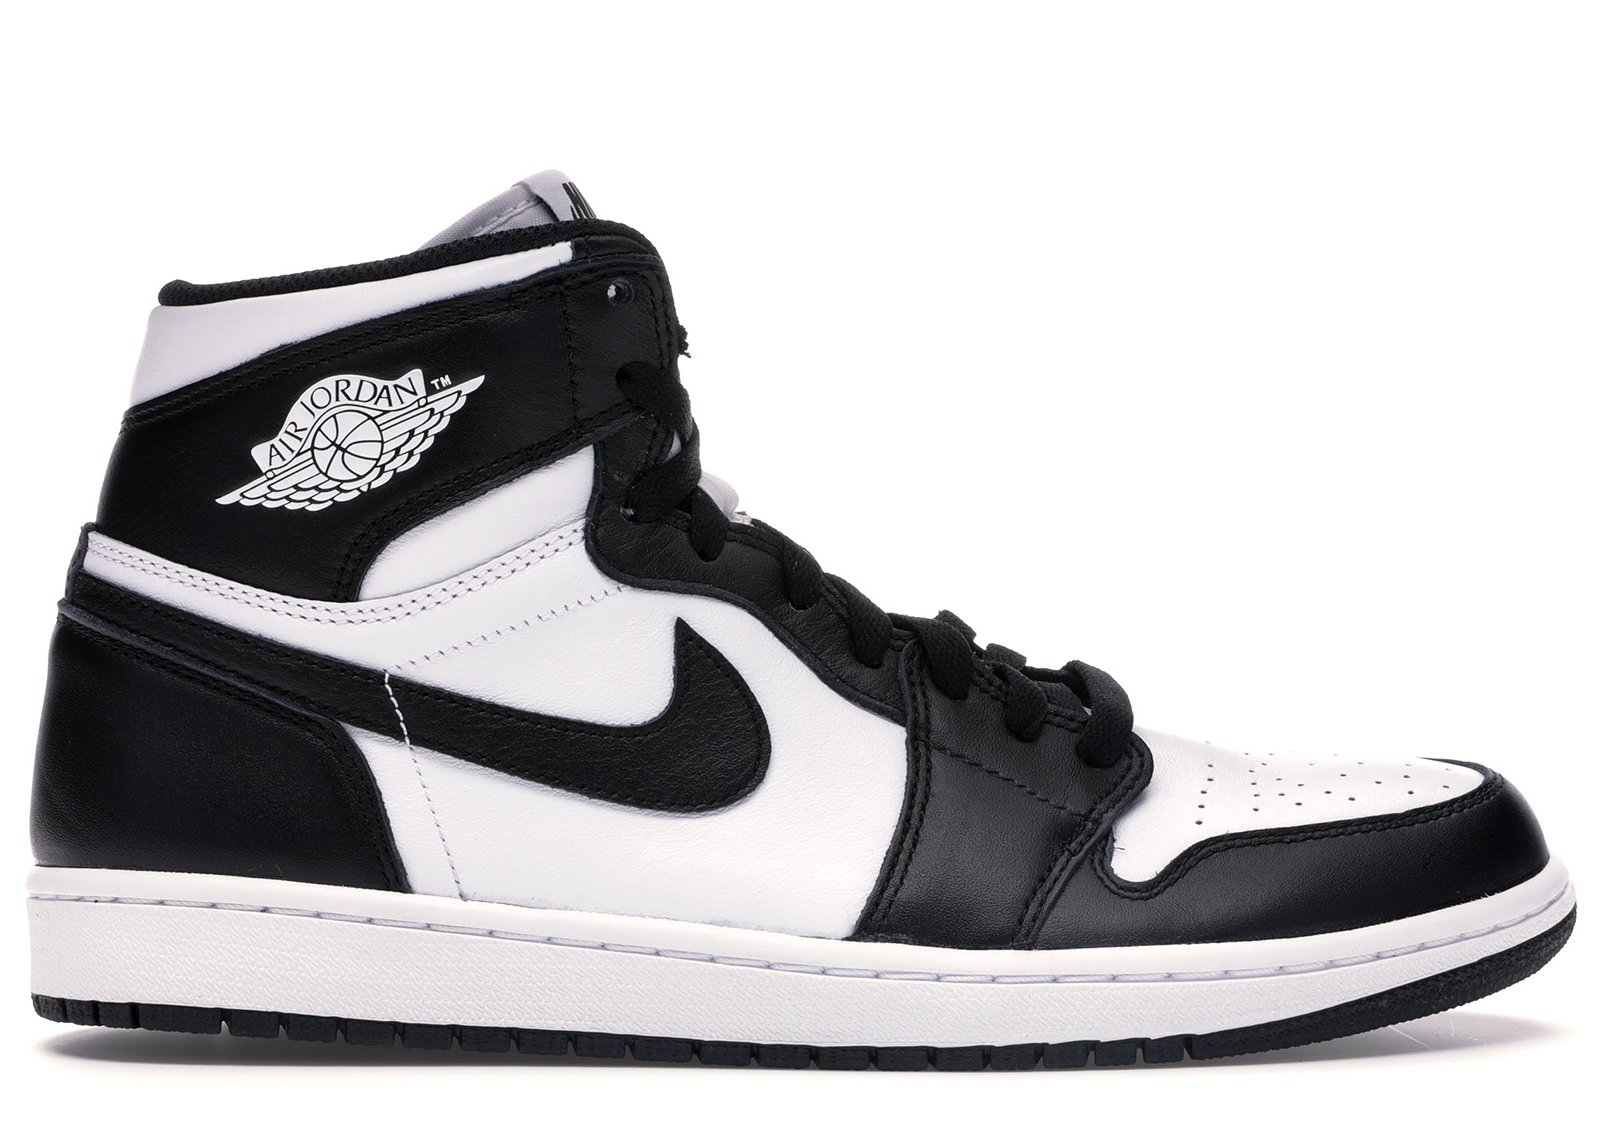 Jordan 1 Retro Black White (2014) sneakers